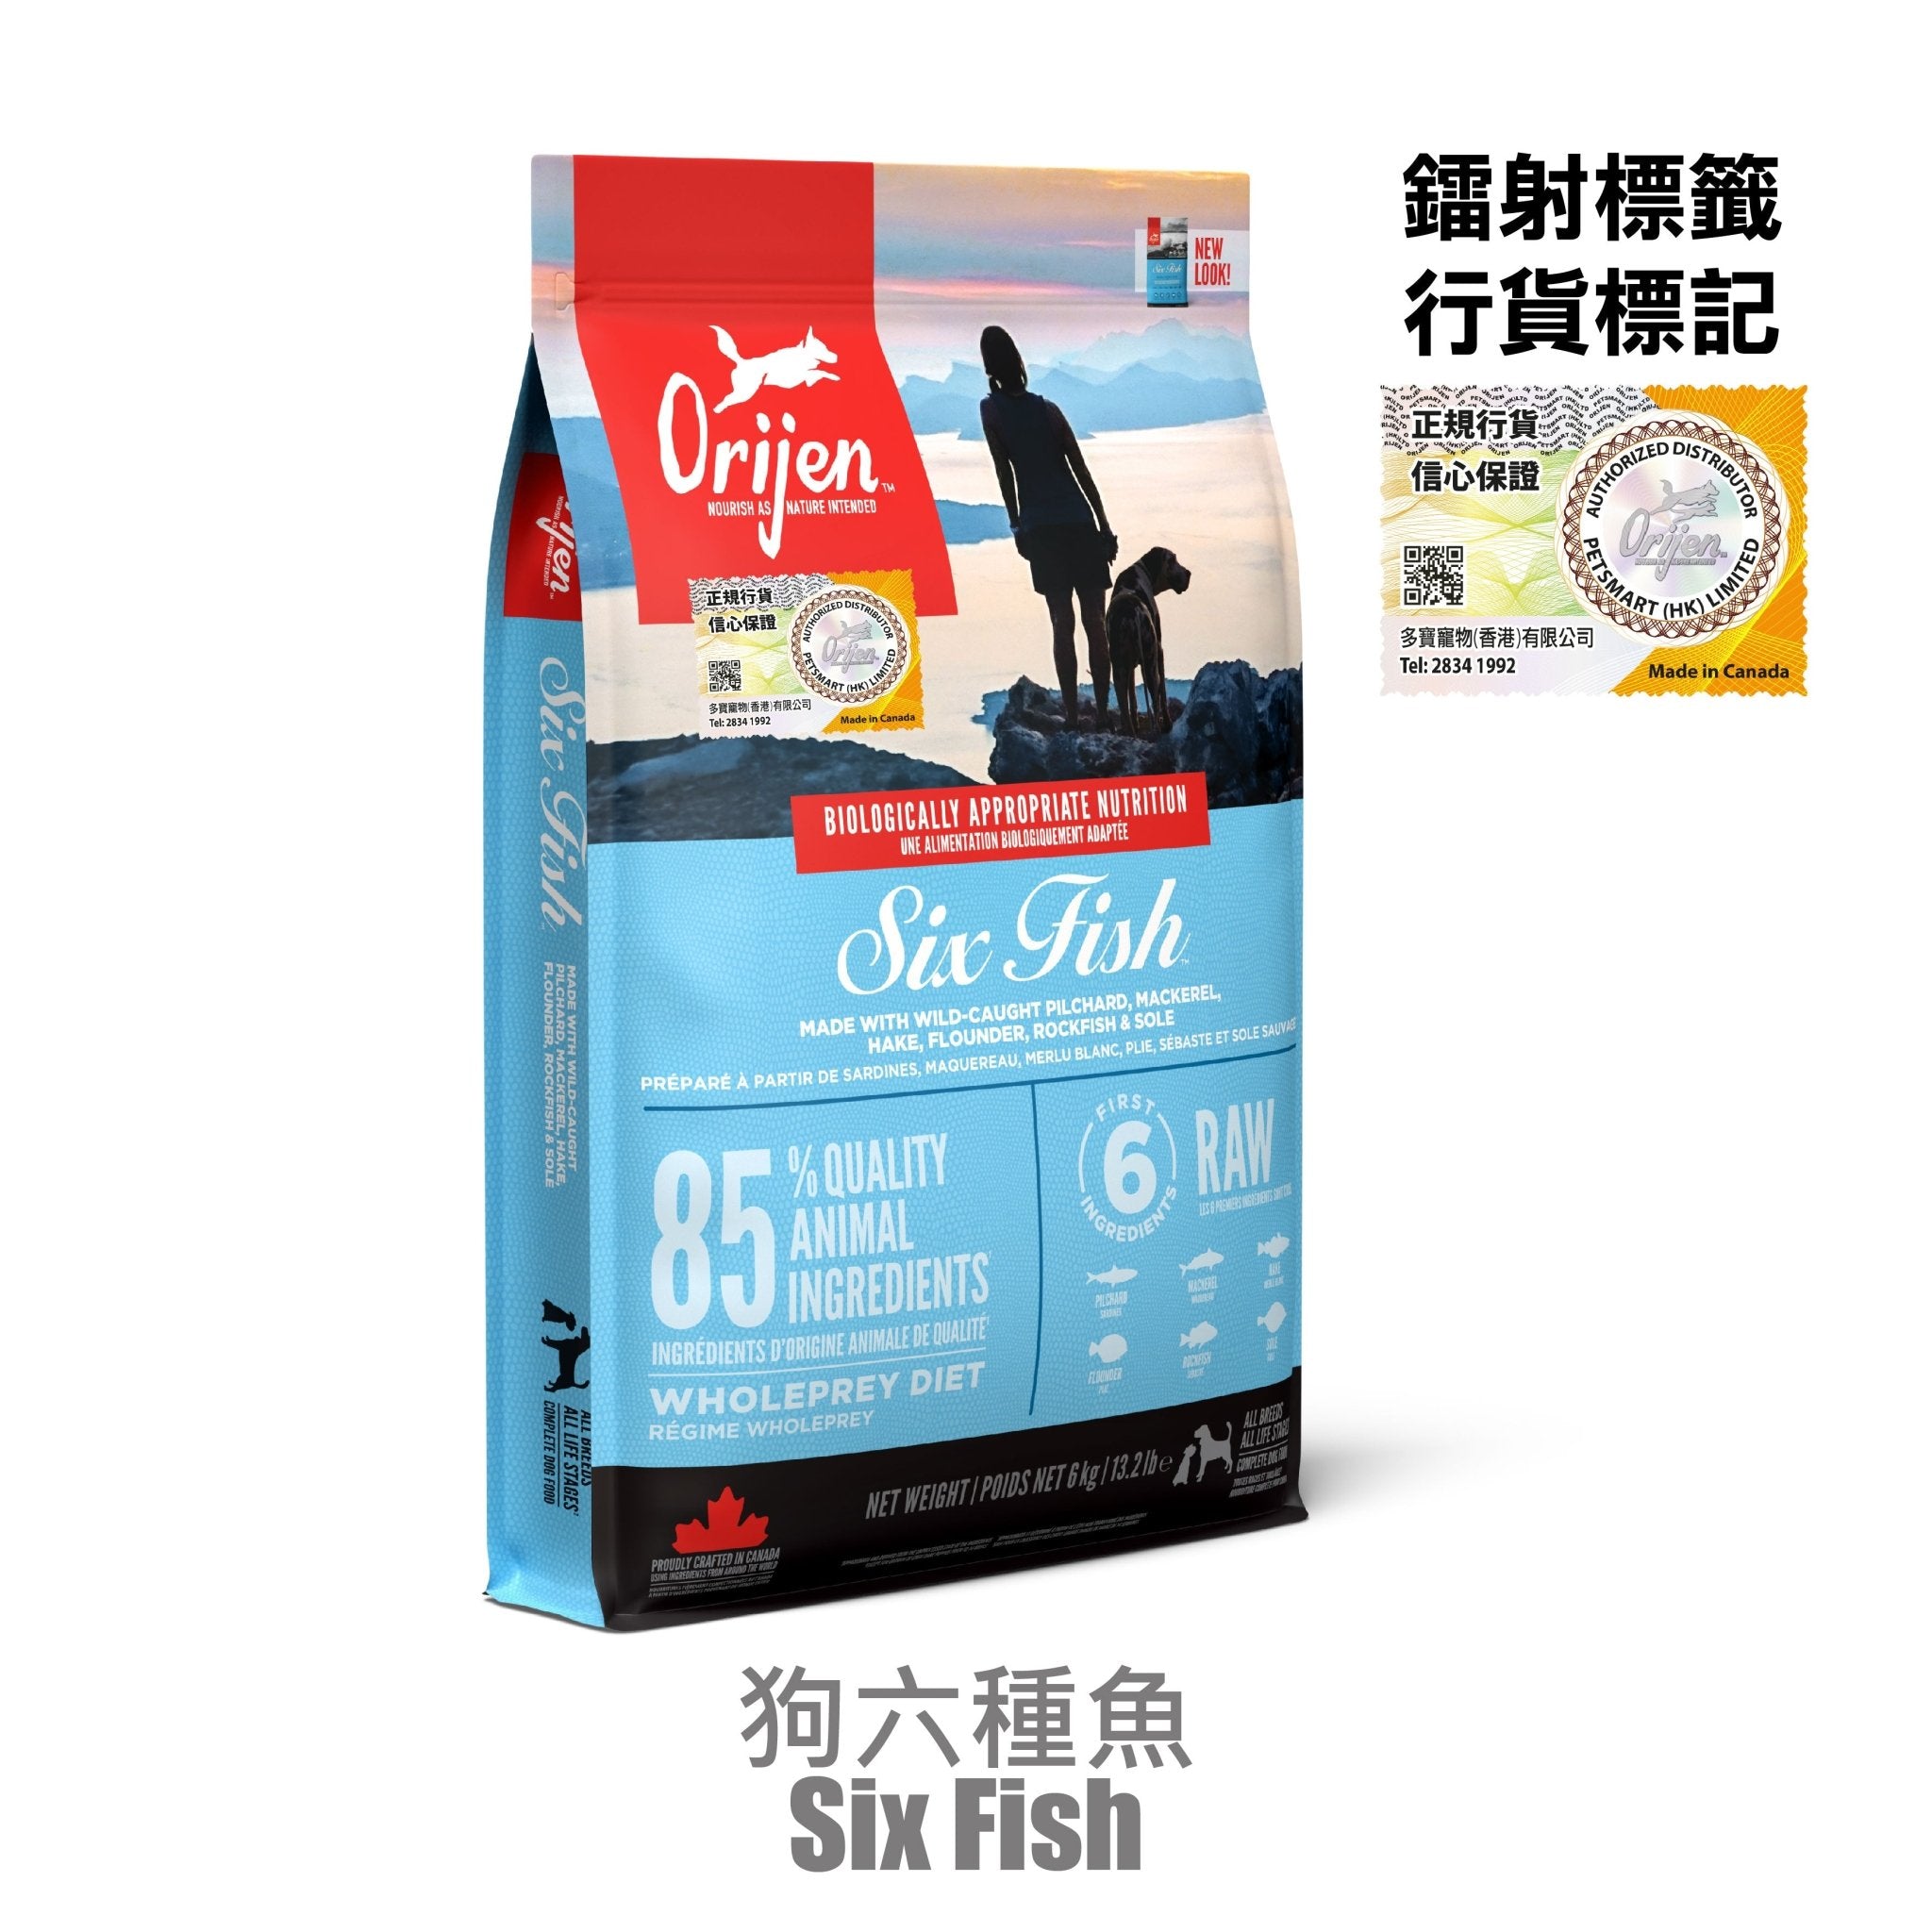 Orijen Grain-Free Six Fish Six Types of Fish (For Dogs) Special Formula